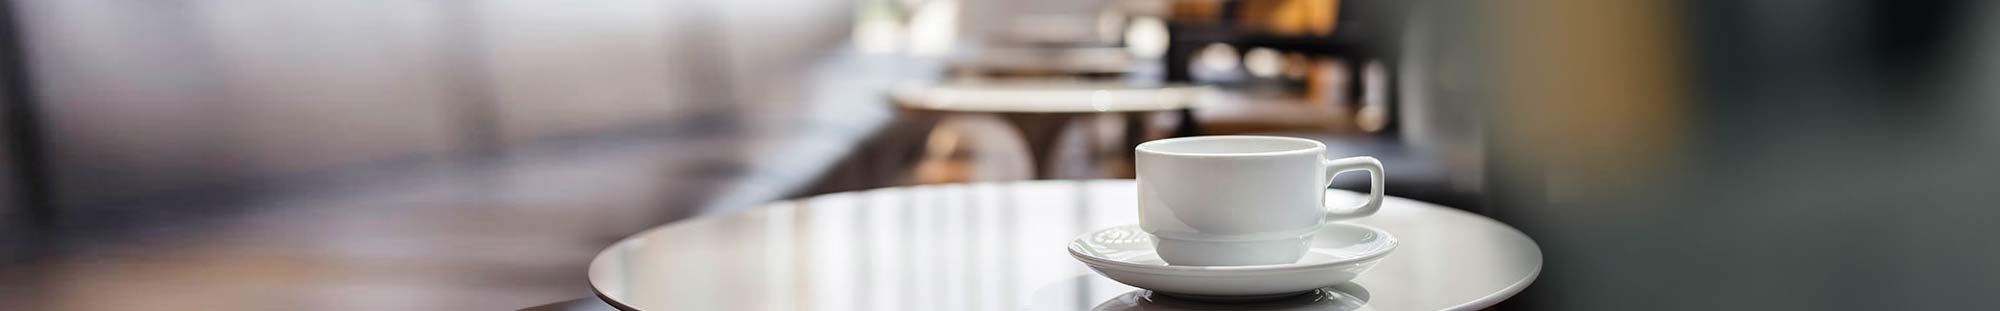 coffee mug on a cafe table